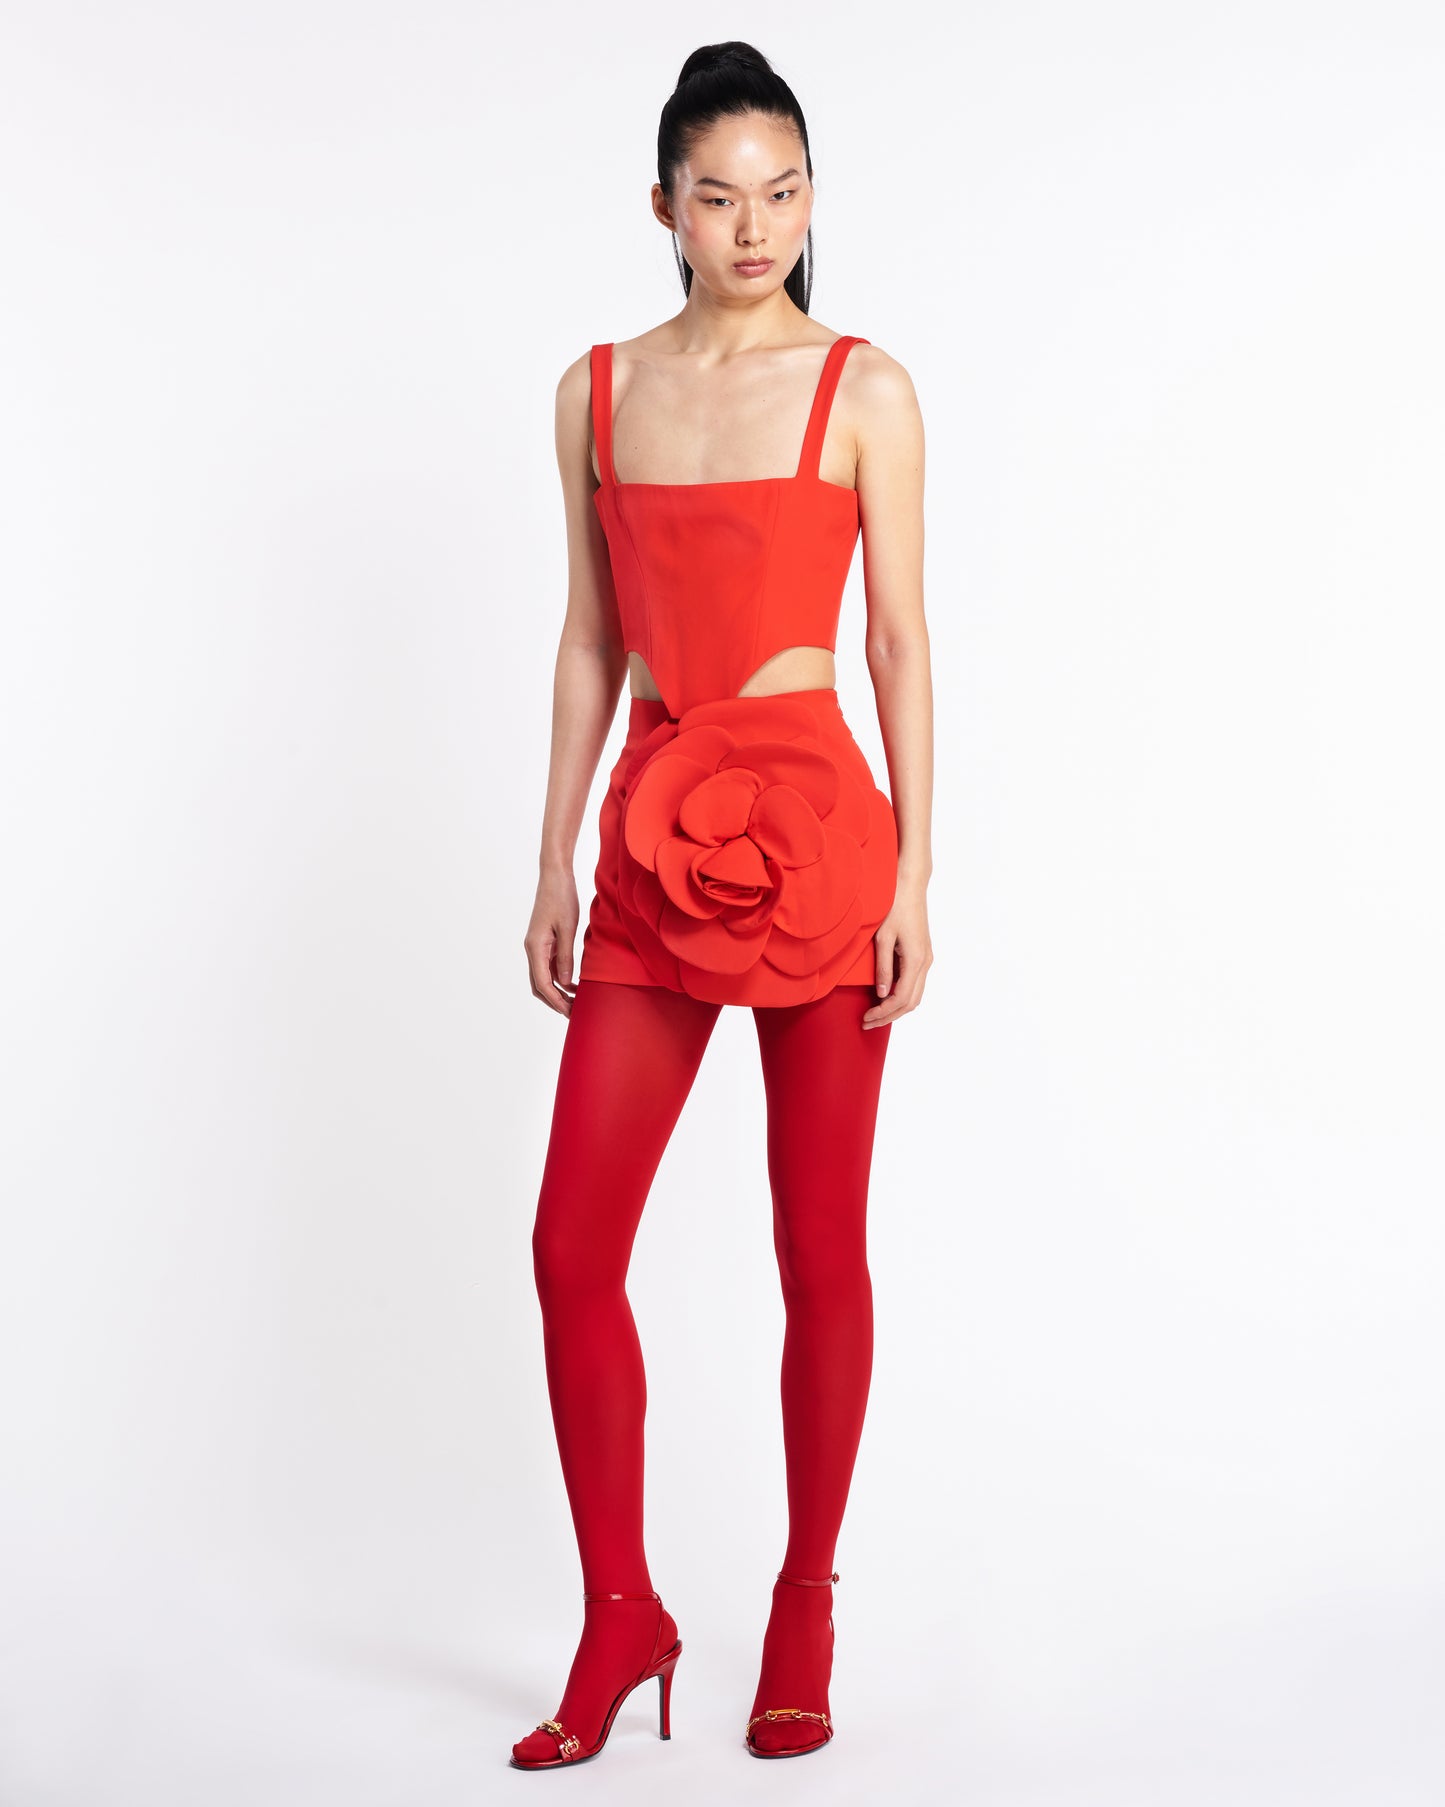 Rose Skirt & Top - Red